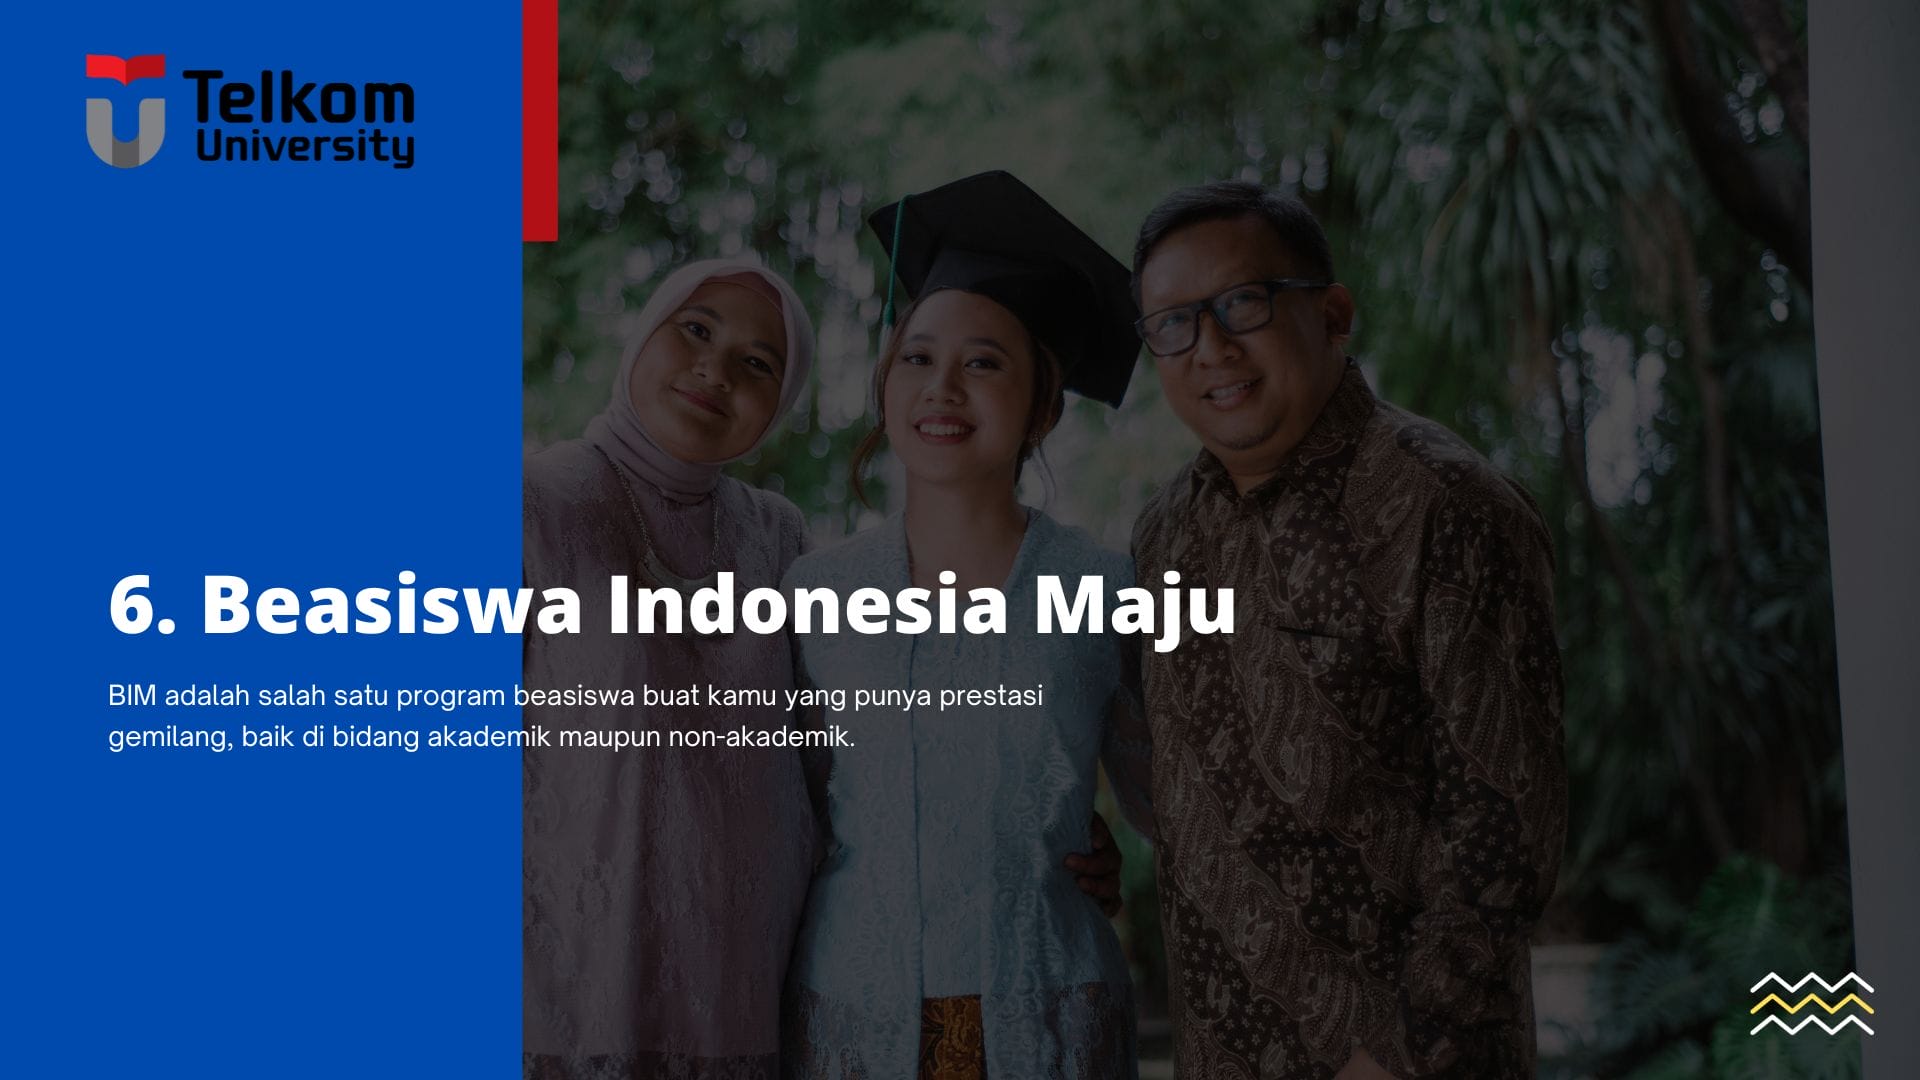 Beasiswa Indonesia Maju